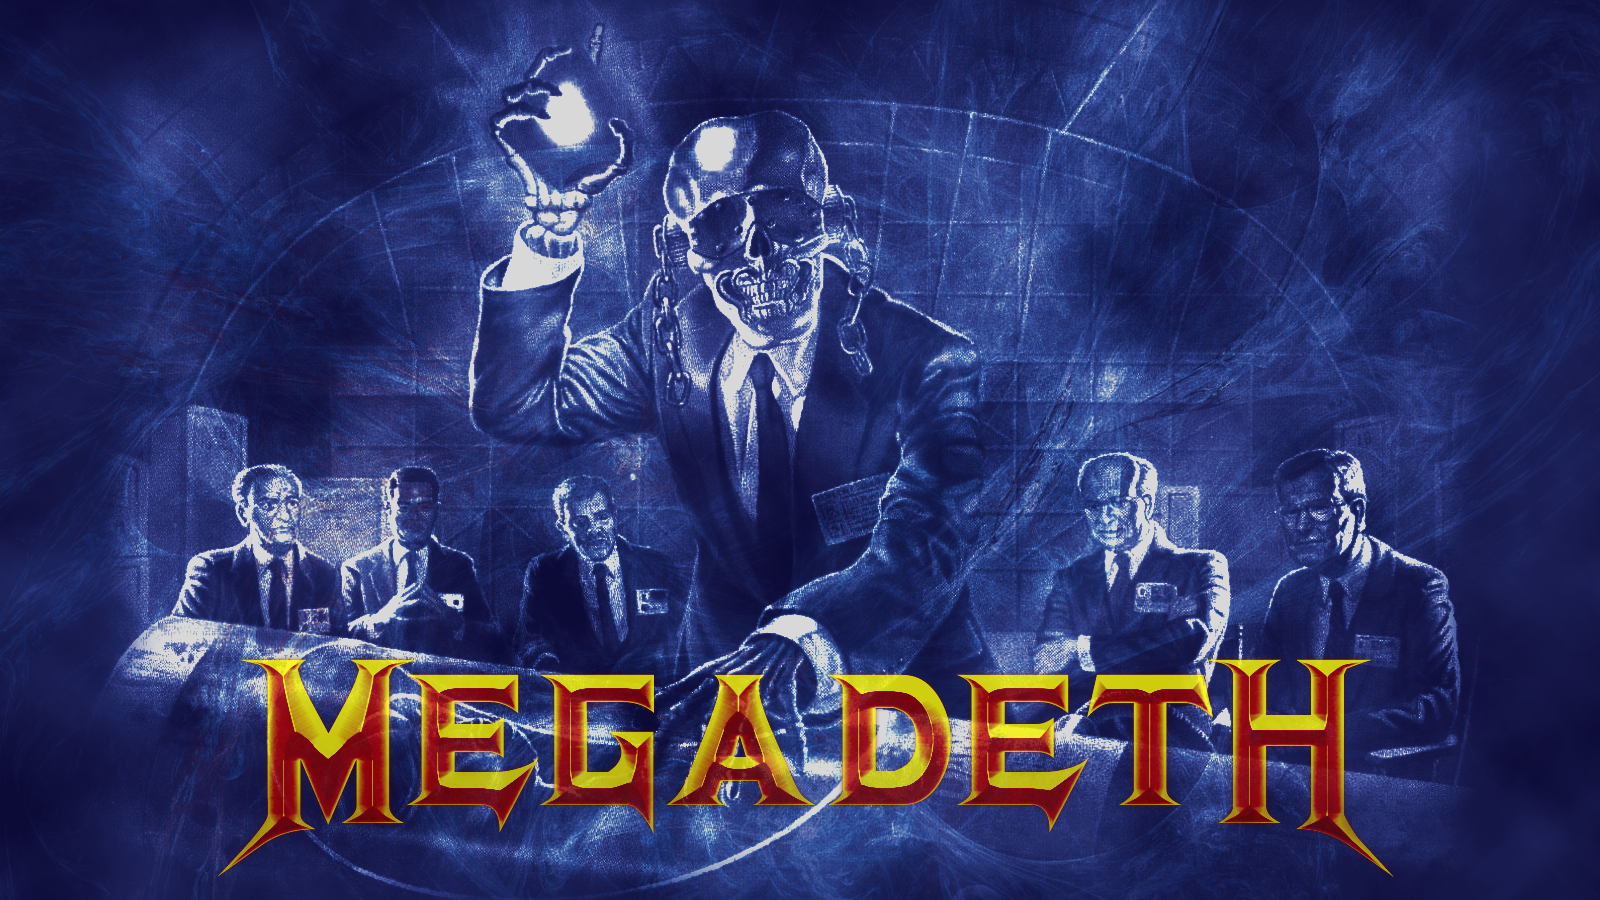 Megadeth Computer Wallpapers, Desktop Backgrounds 1600x900 ID